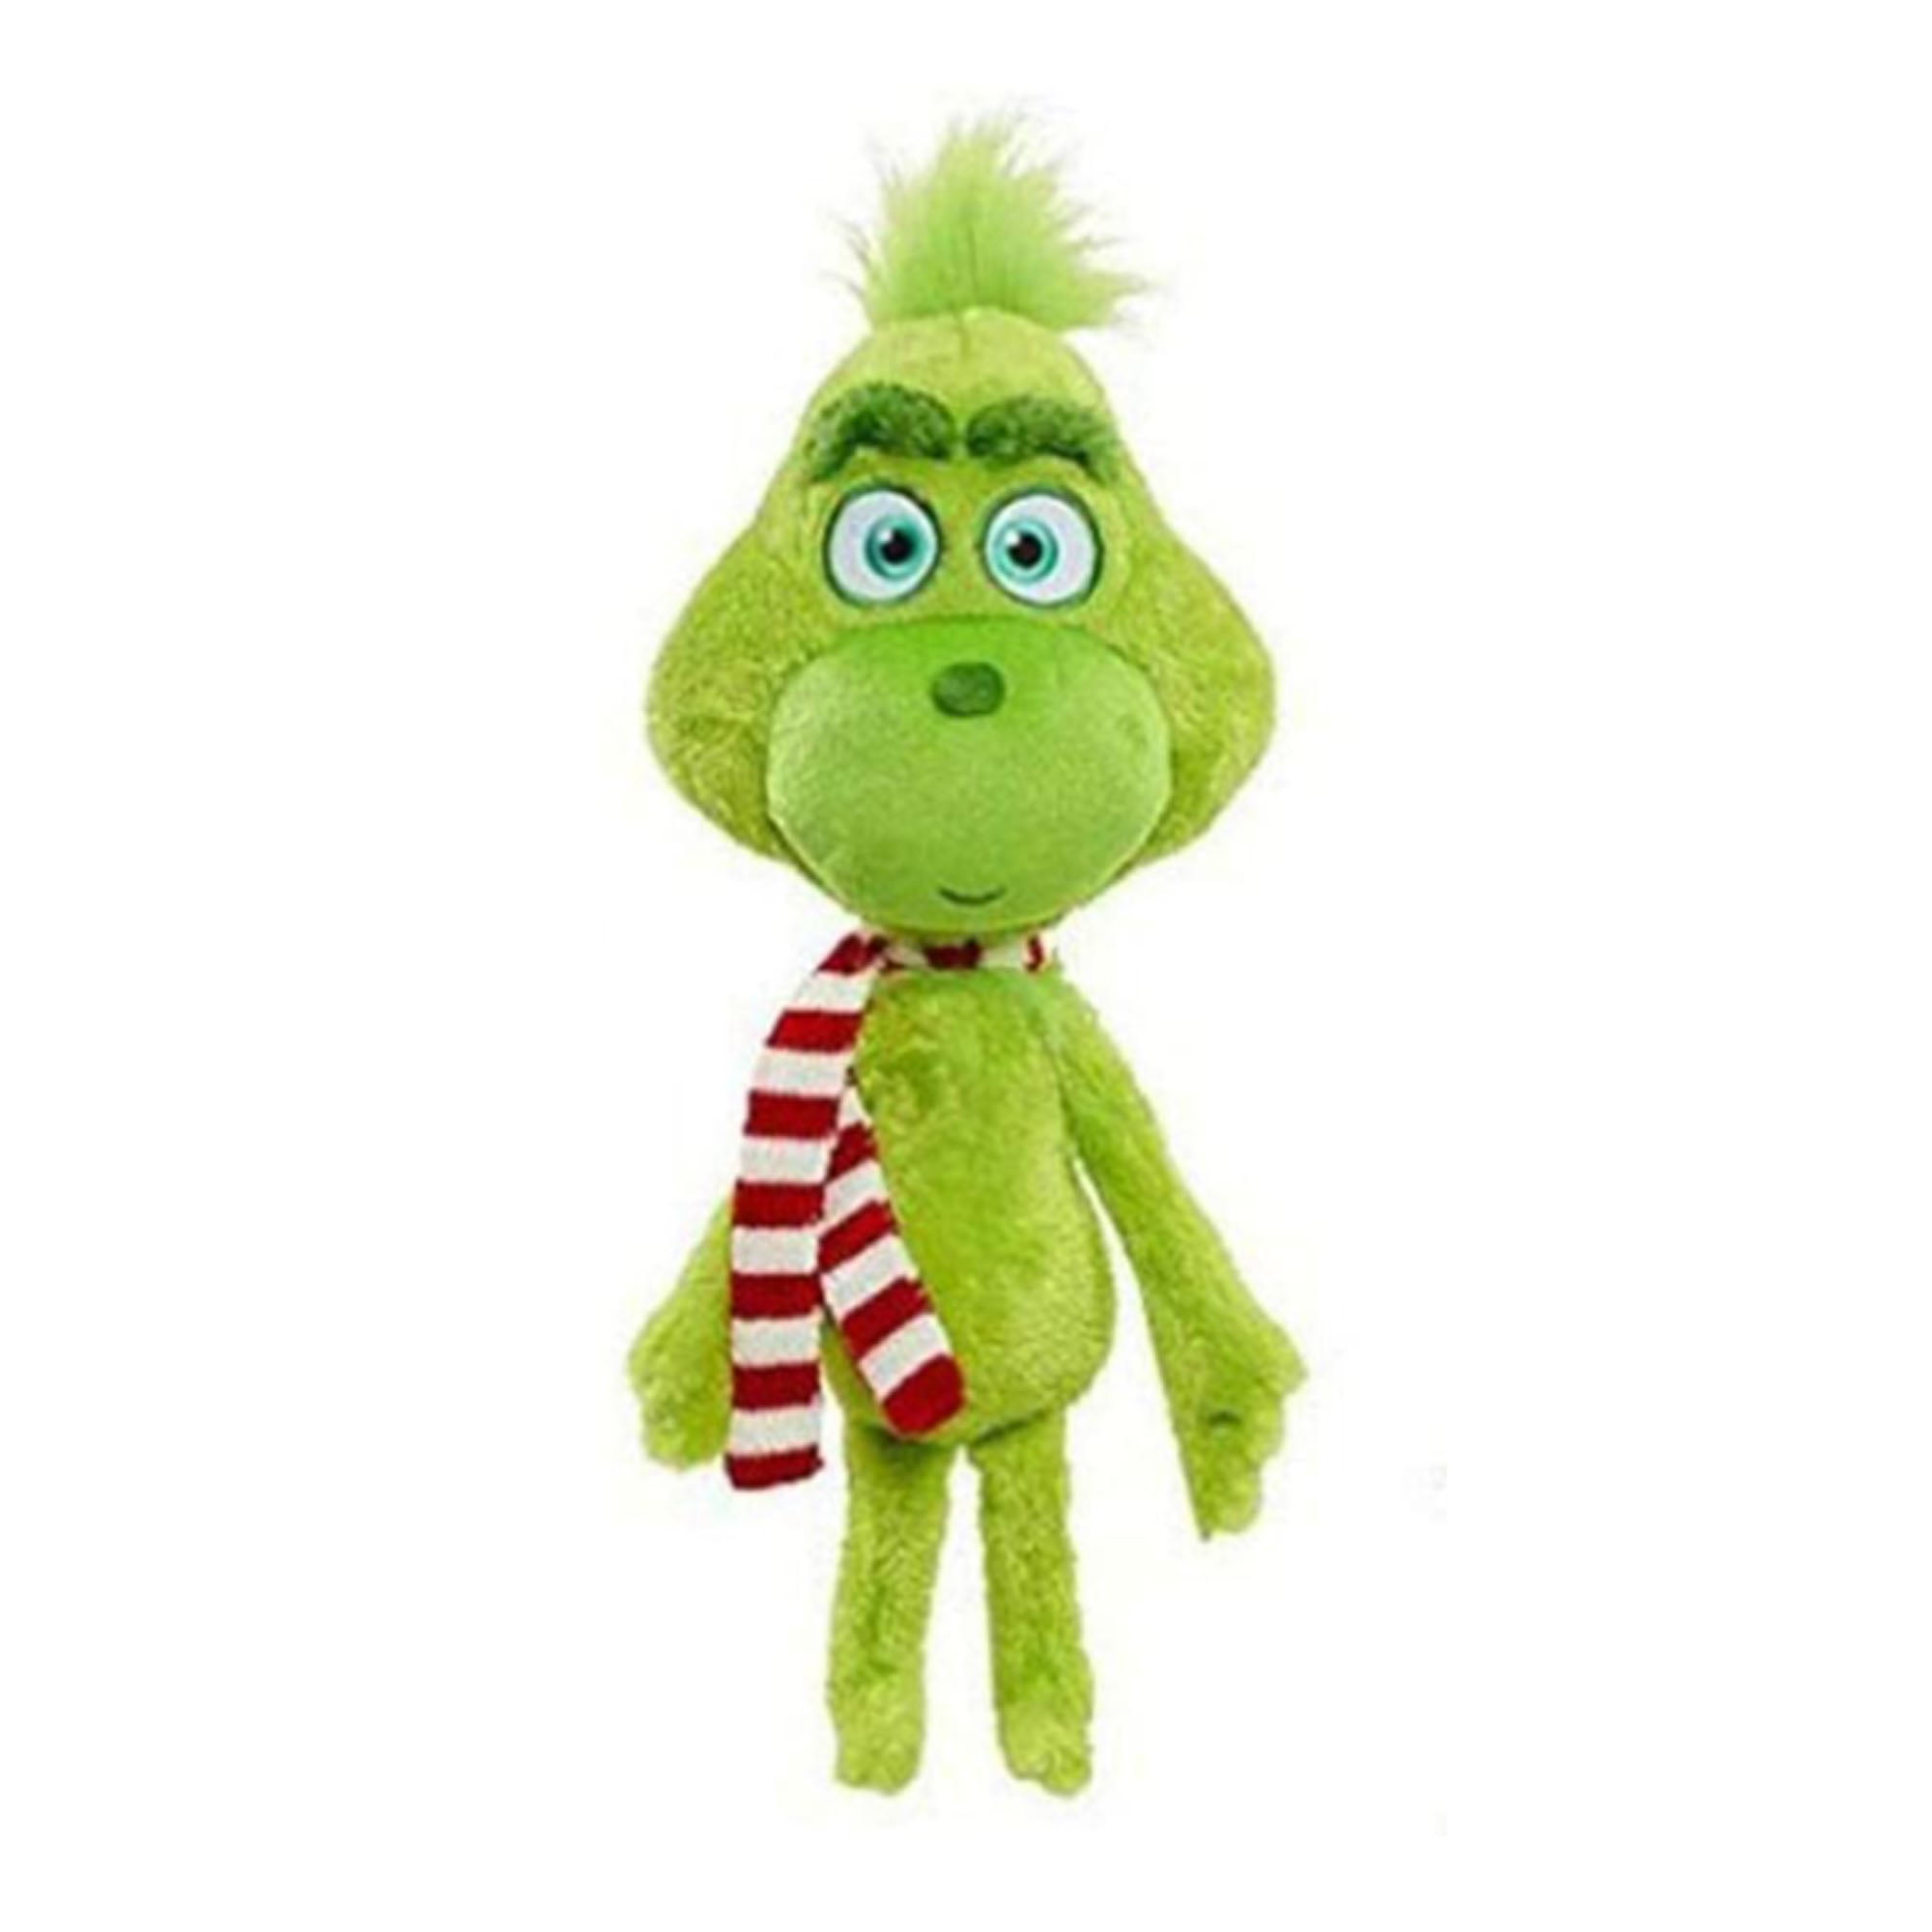 "Grinch" Stuffed Animal,Green,16",Dr NEW Seuss Aurora,NEW Christmas Gift 